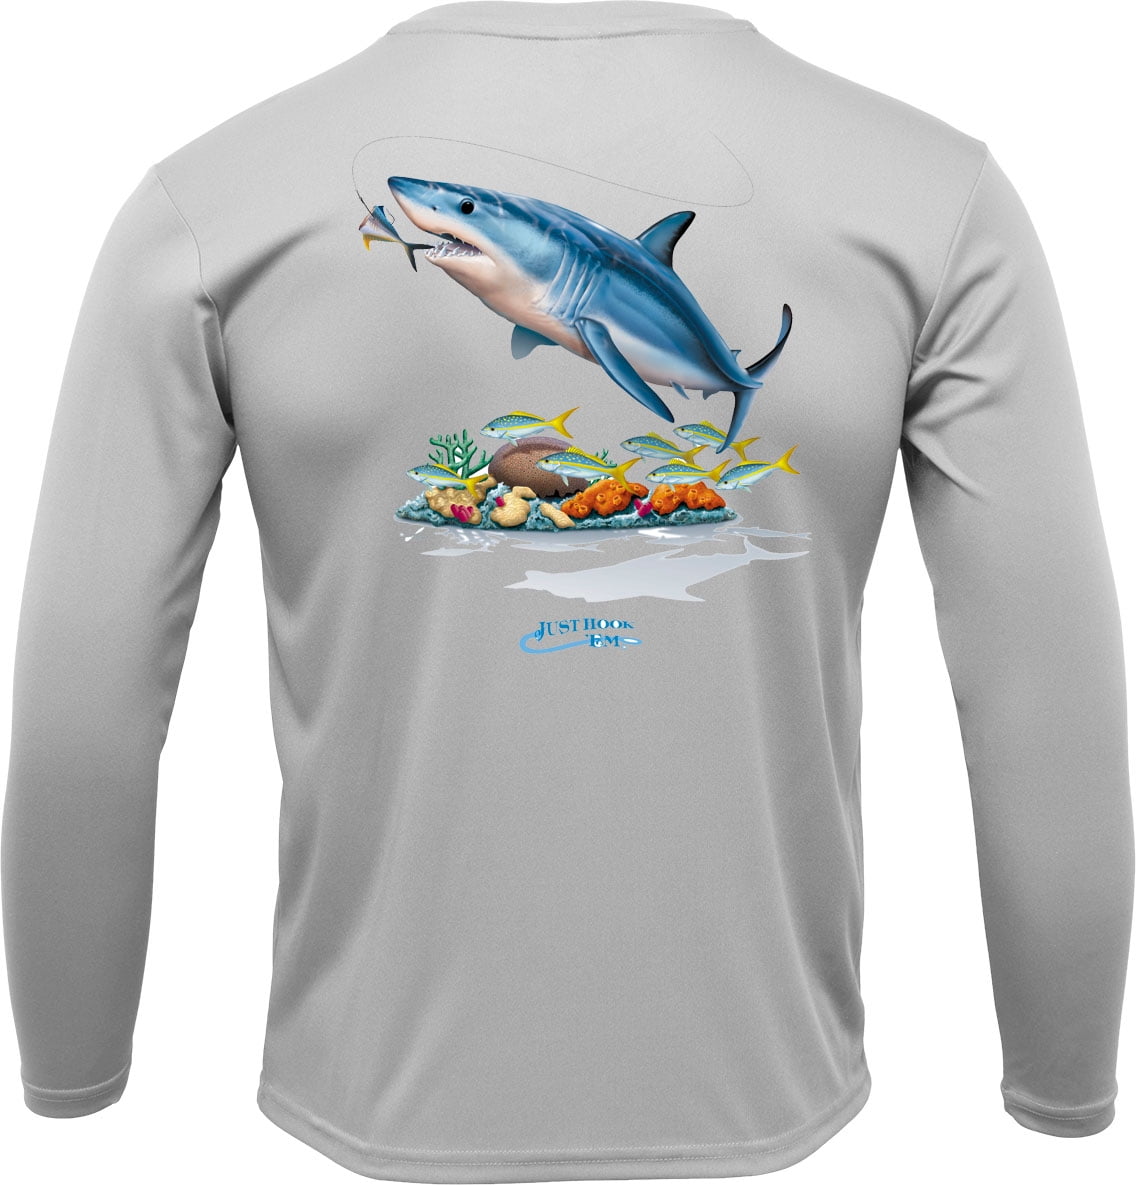 Performance Fishing Shirt Long Sleeve UPF 50+ (Mako Shark)